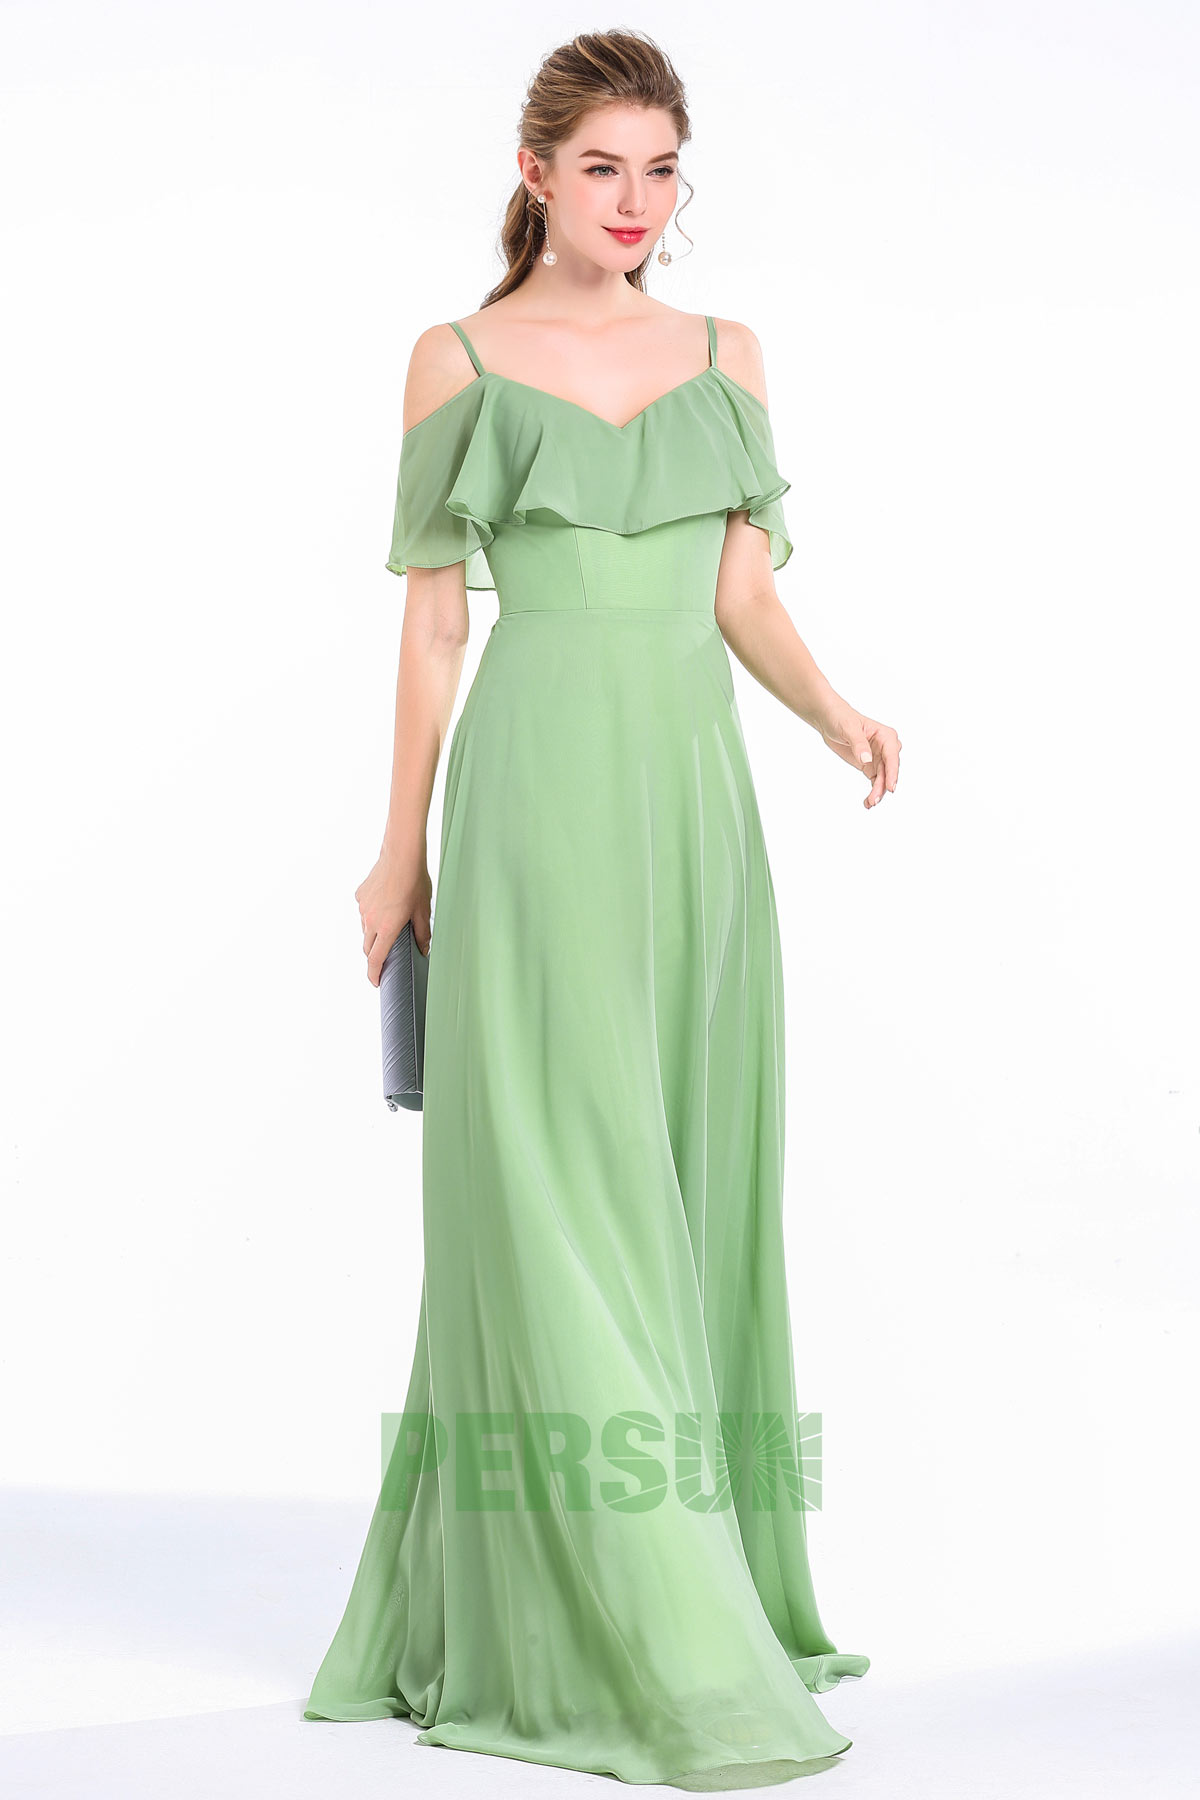 robe-cortege-mariage-greenary-vert-celeri-epaule-denude.jpg?profile=RESIZE_584x